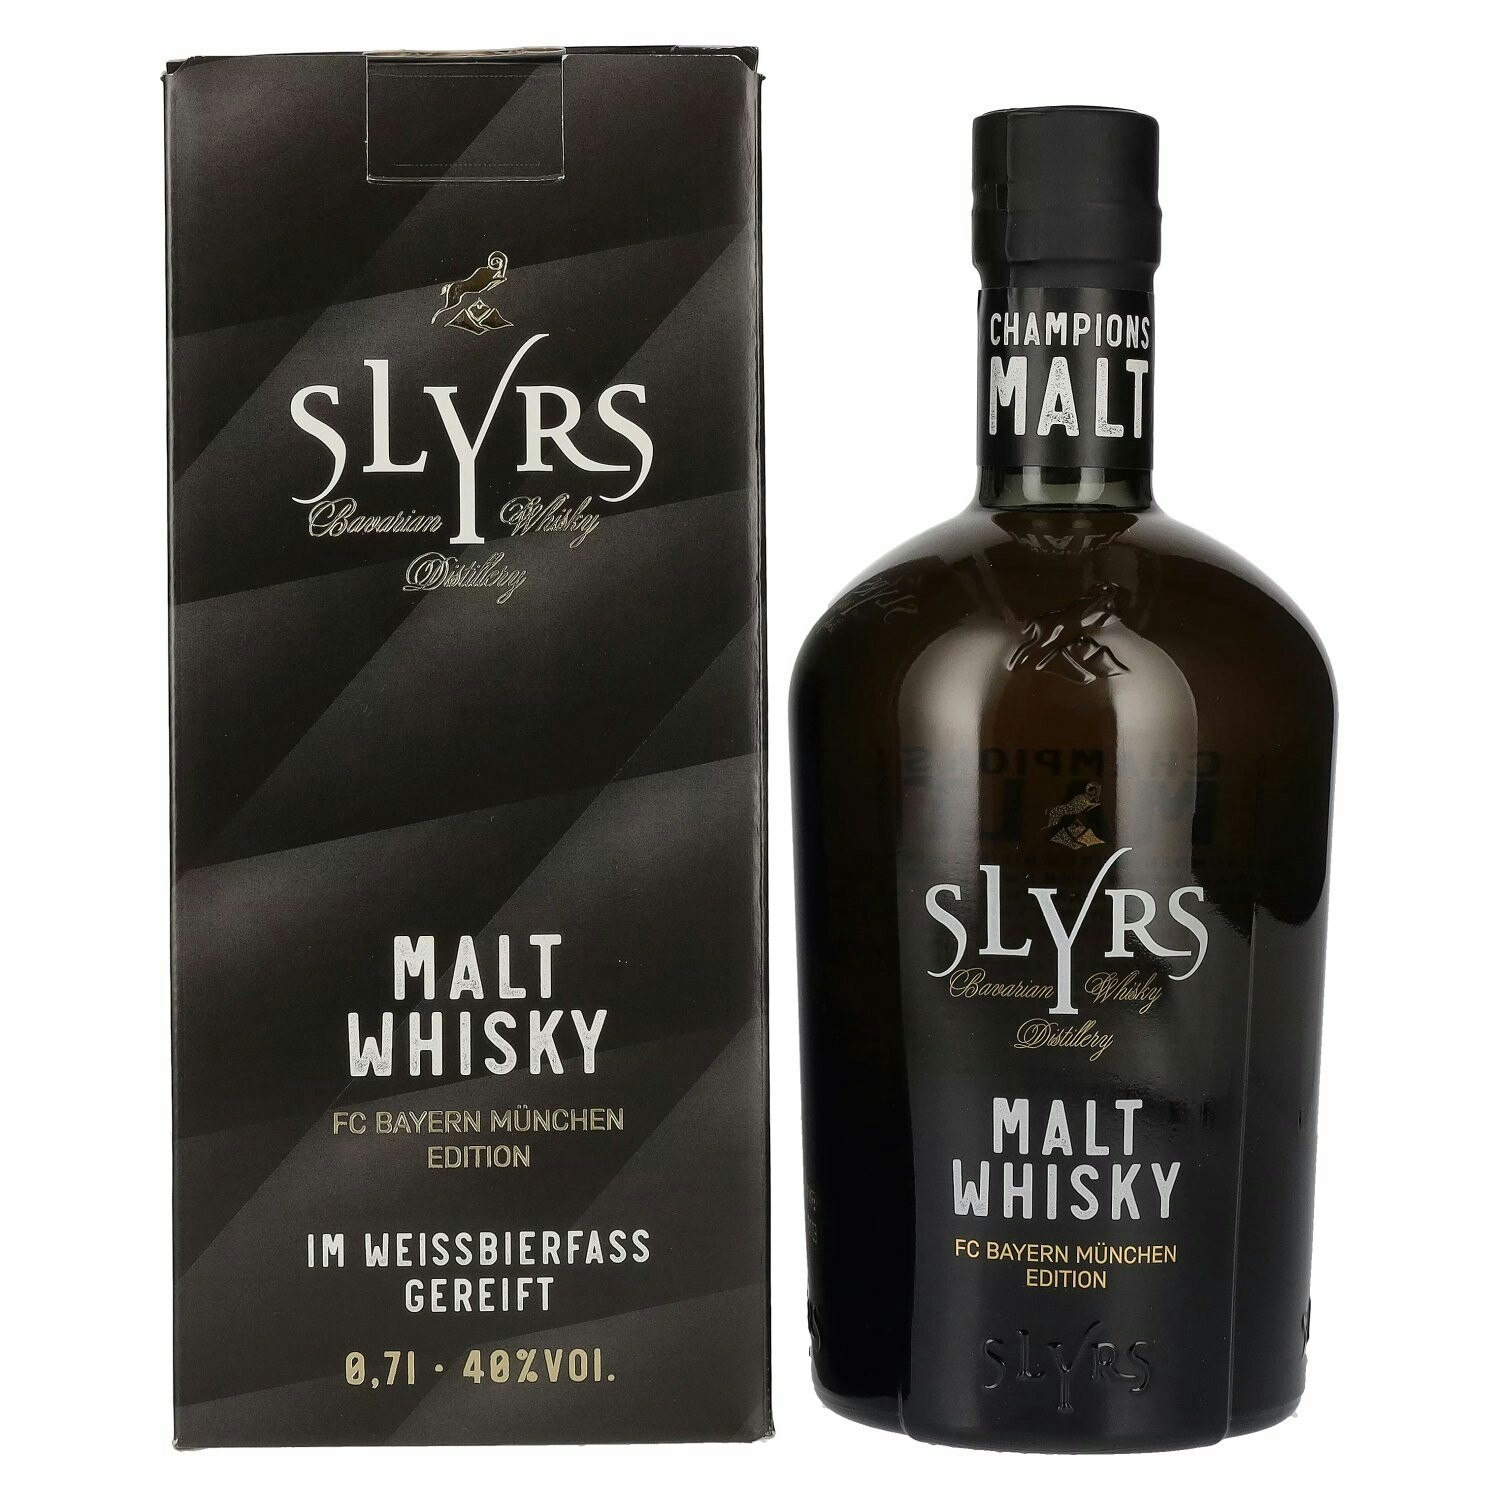 Slyrs FC Bayern München Champions Malt Whisky 40% Vol. 0,7l in Giftbox